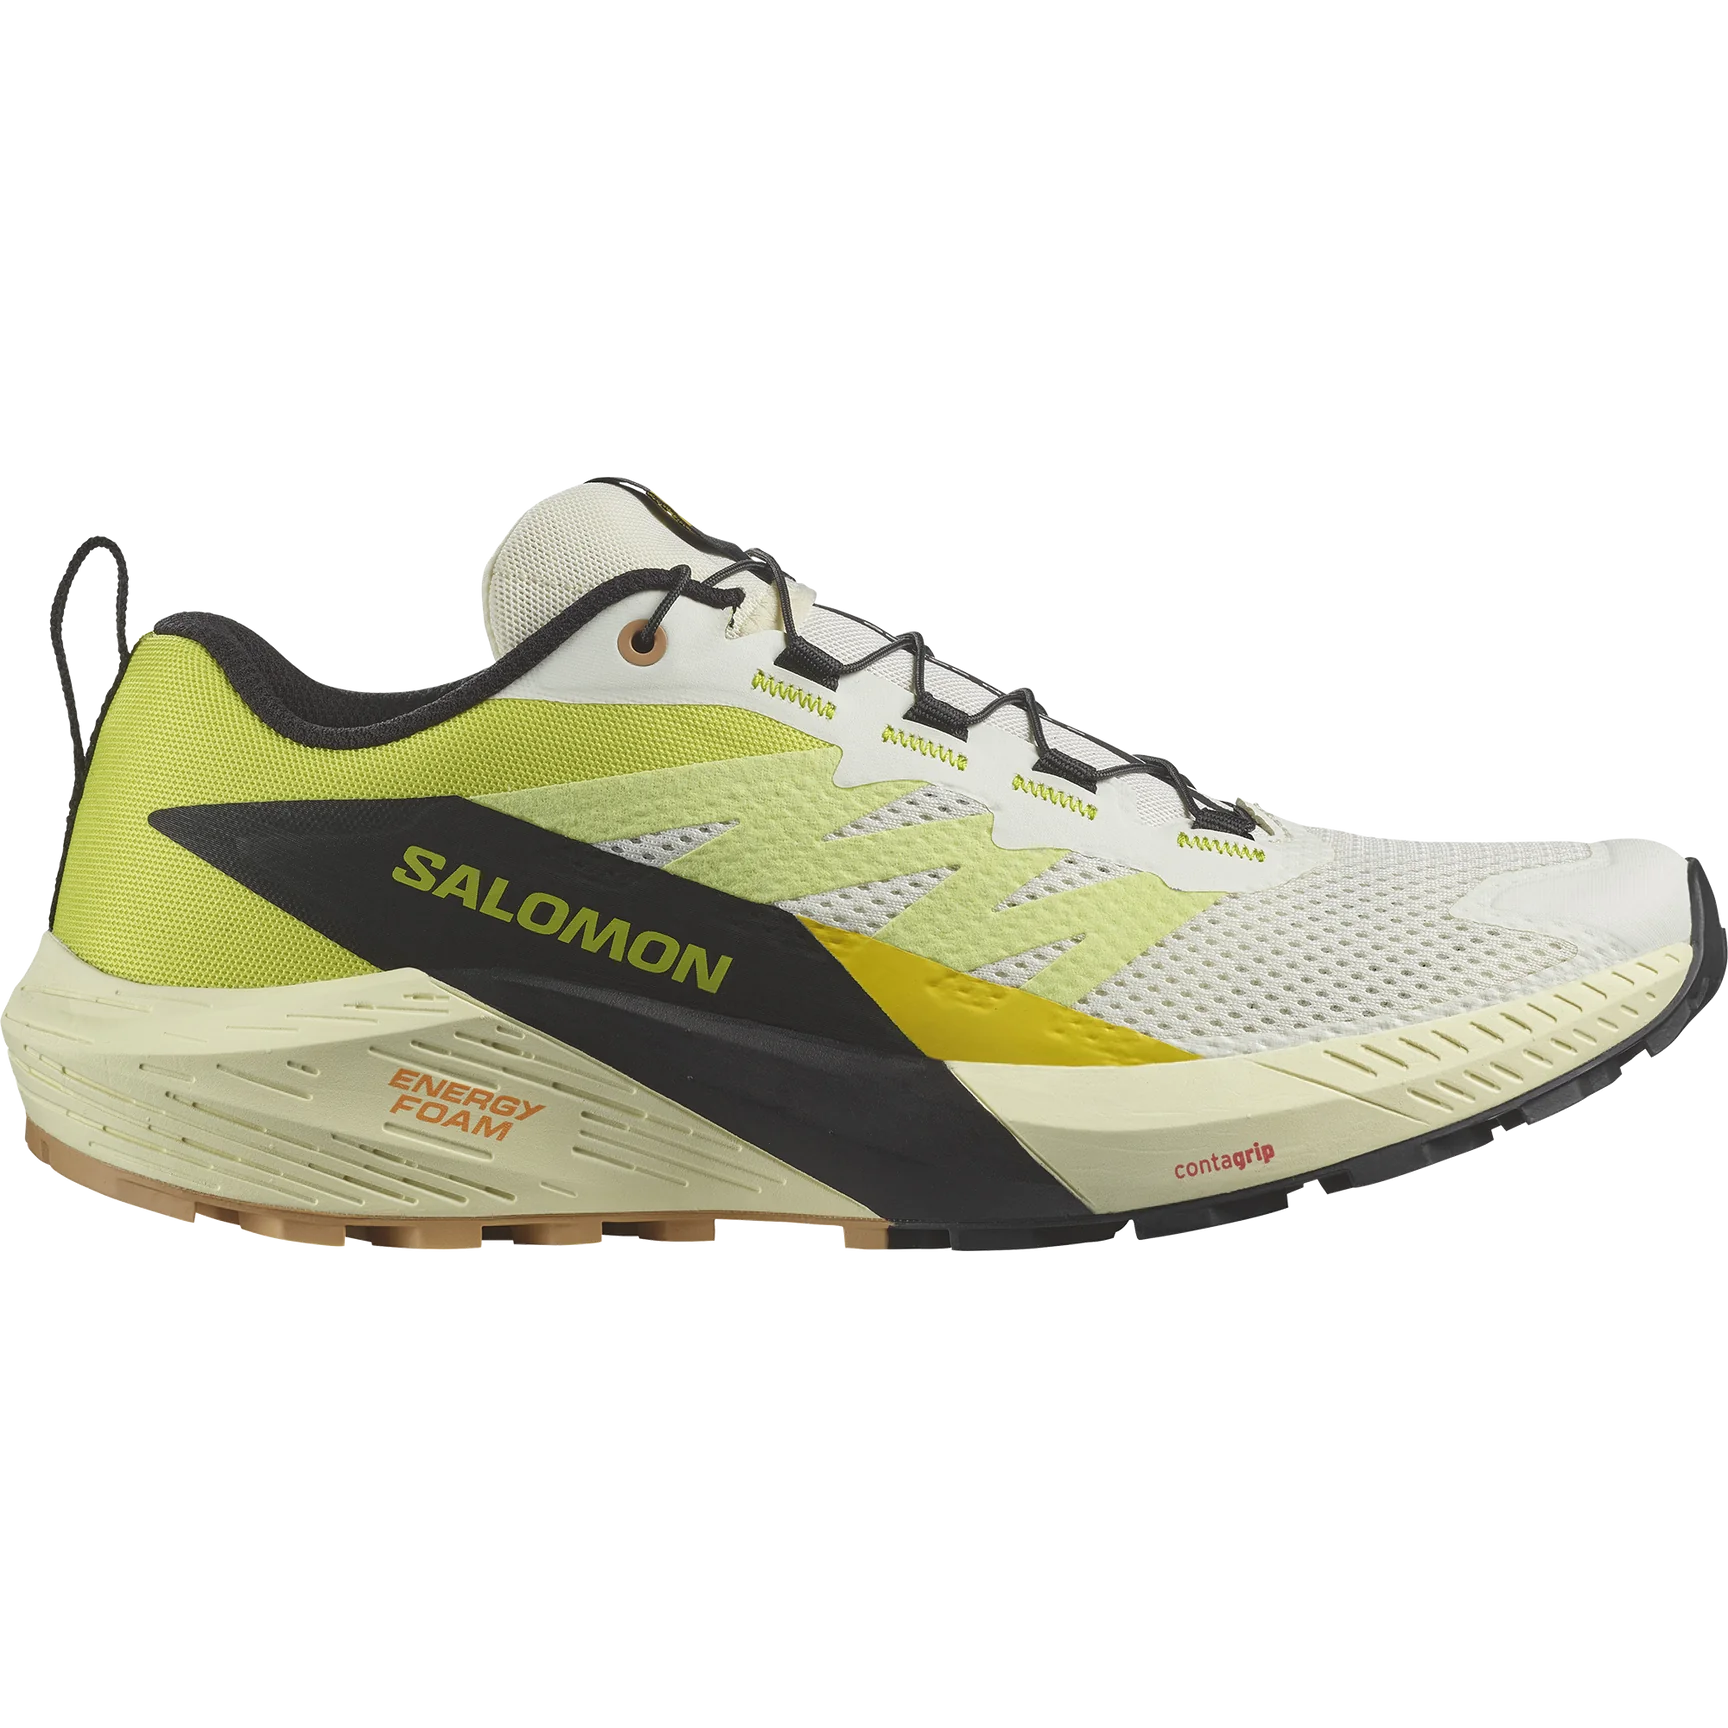 Salomon Sense Ride 5 Shoes (Men's) - Vanilla Ice / Sulphur Spring / Black - Find Your Feet Australia Hobart Launceston Tasmania